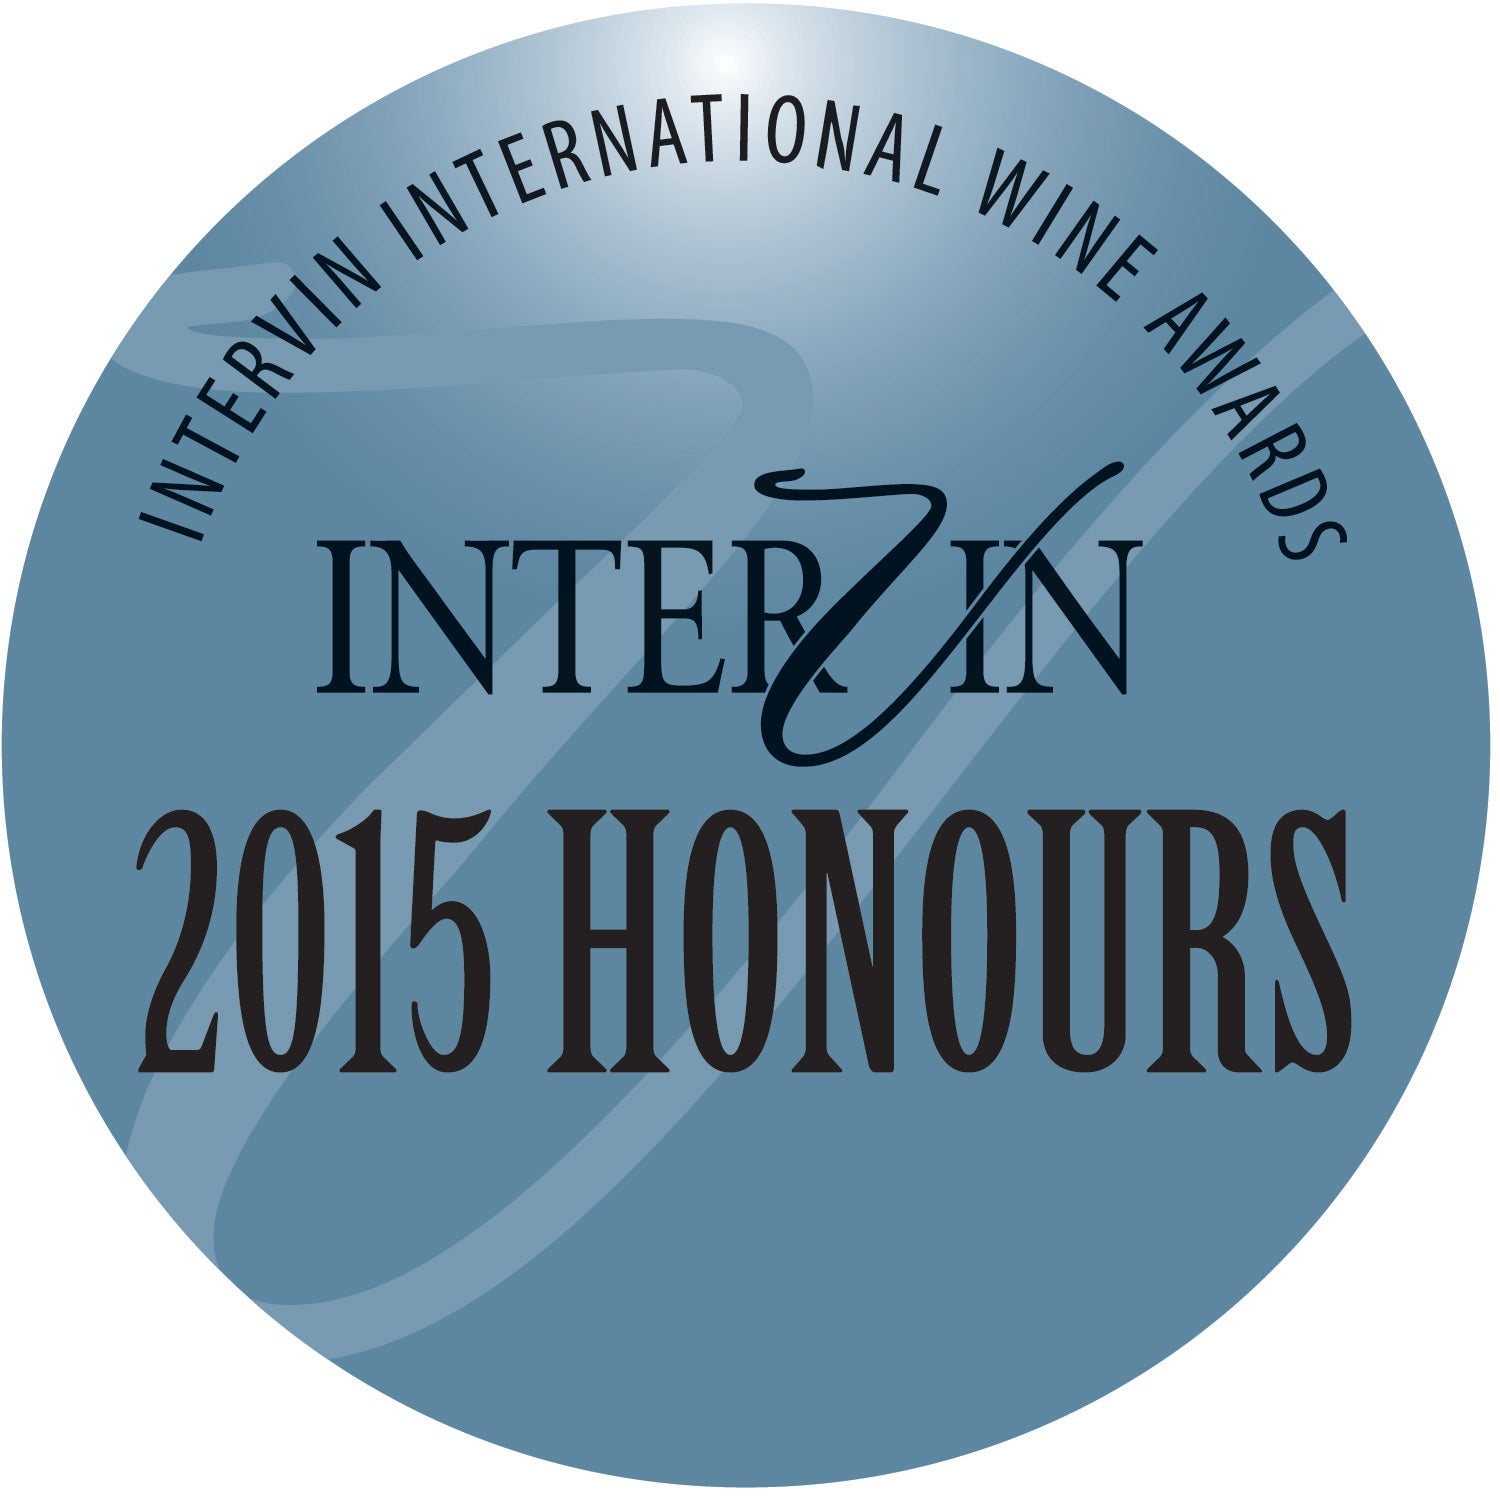 InterVin International Wine Awards 2015, Honours Medal